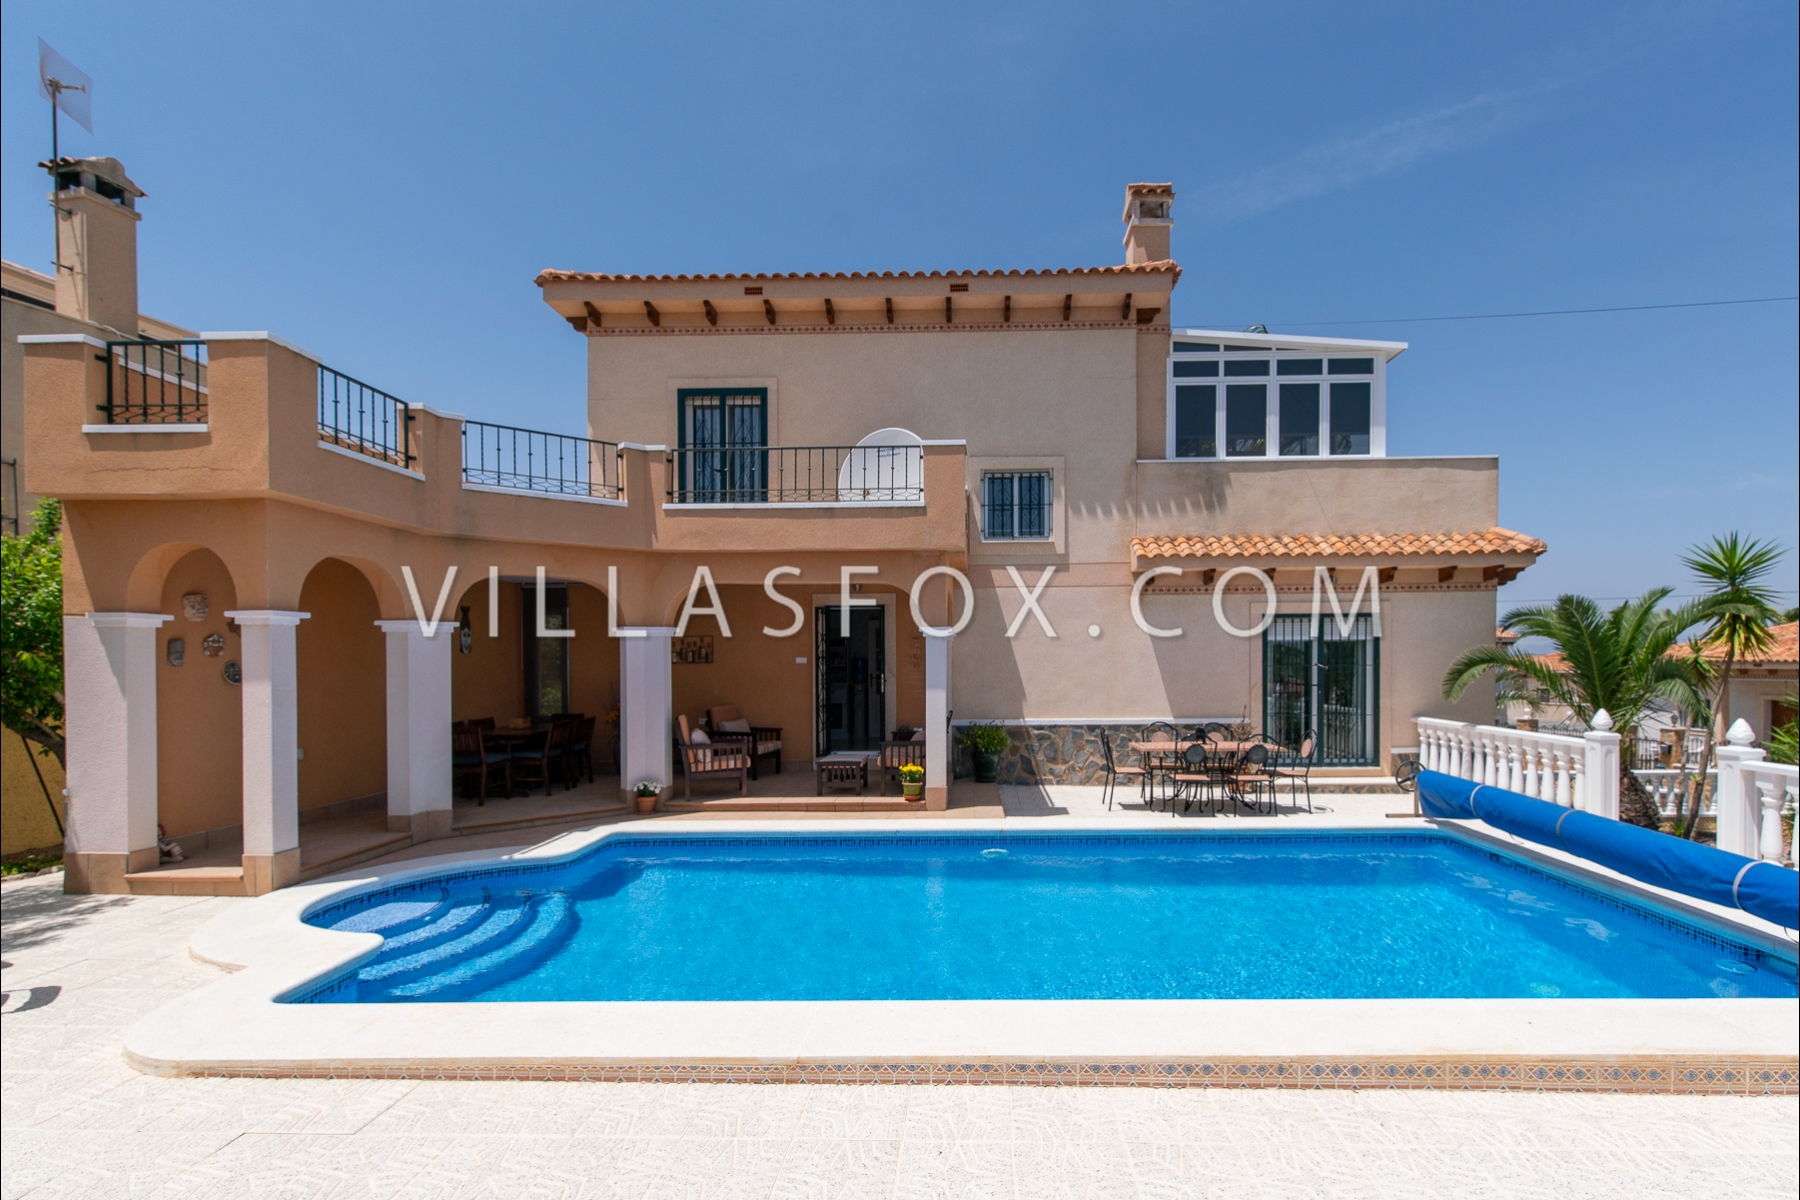 Stunning 3-bedroom, 3-bathroom detached villa with pool, garage and incredible views!